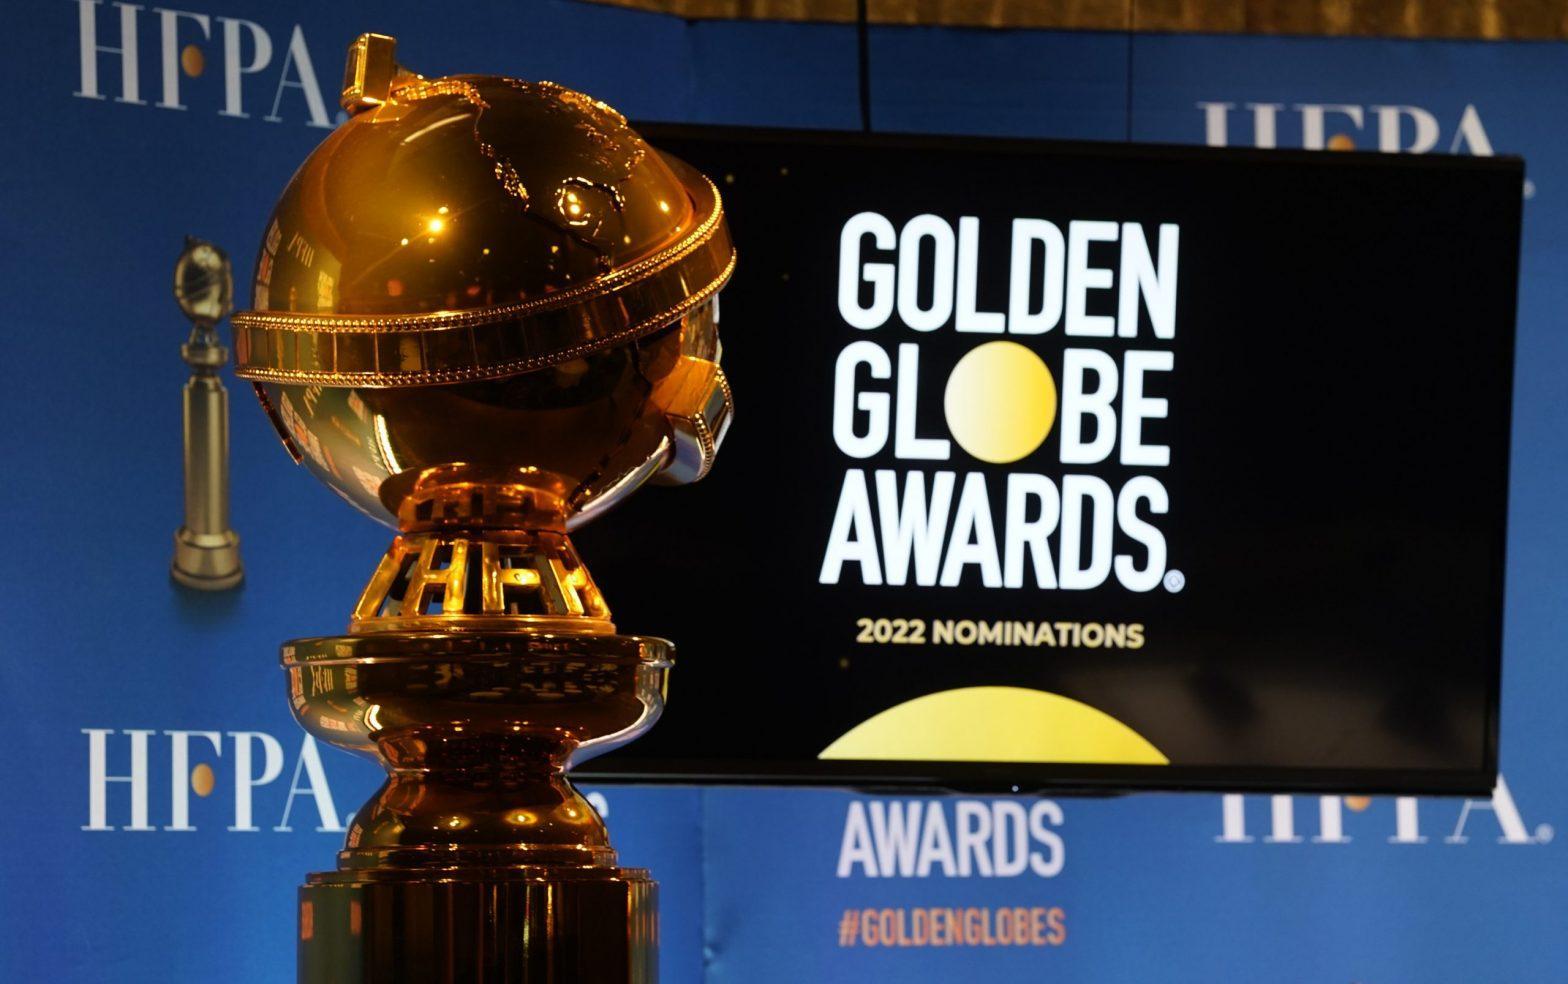 Golden Globe Awards 2022 announced